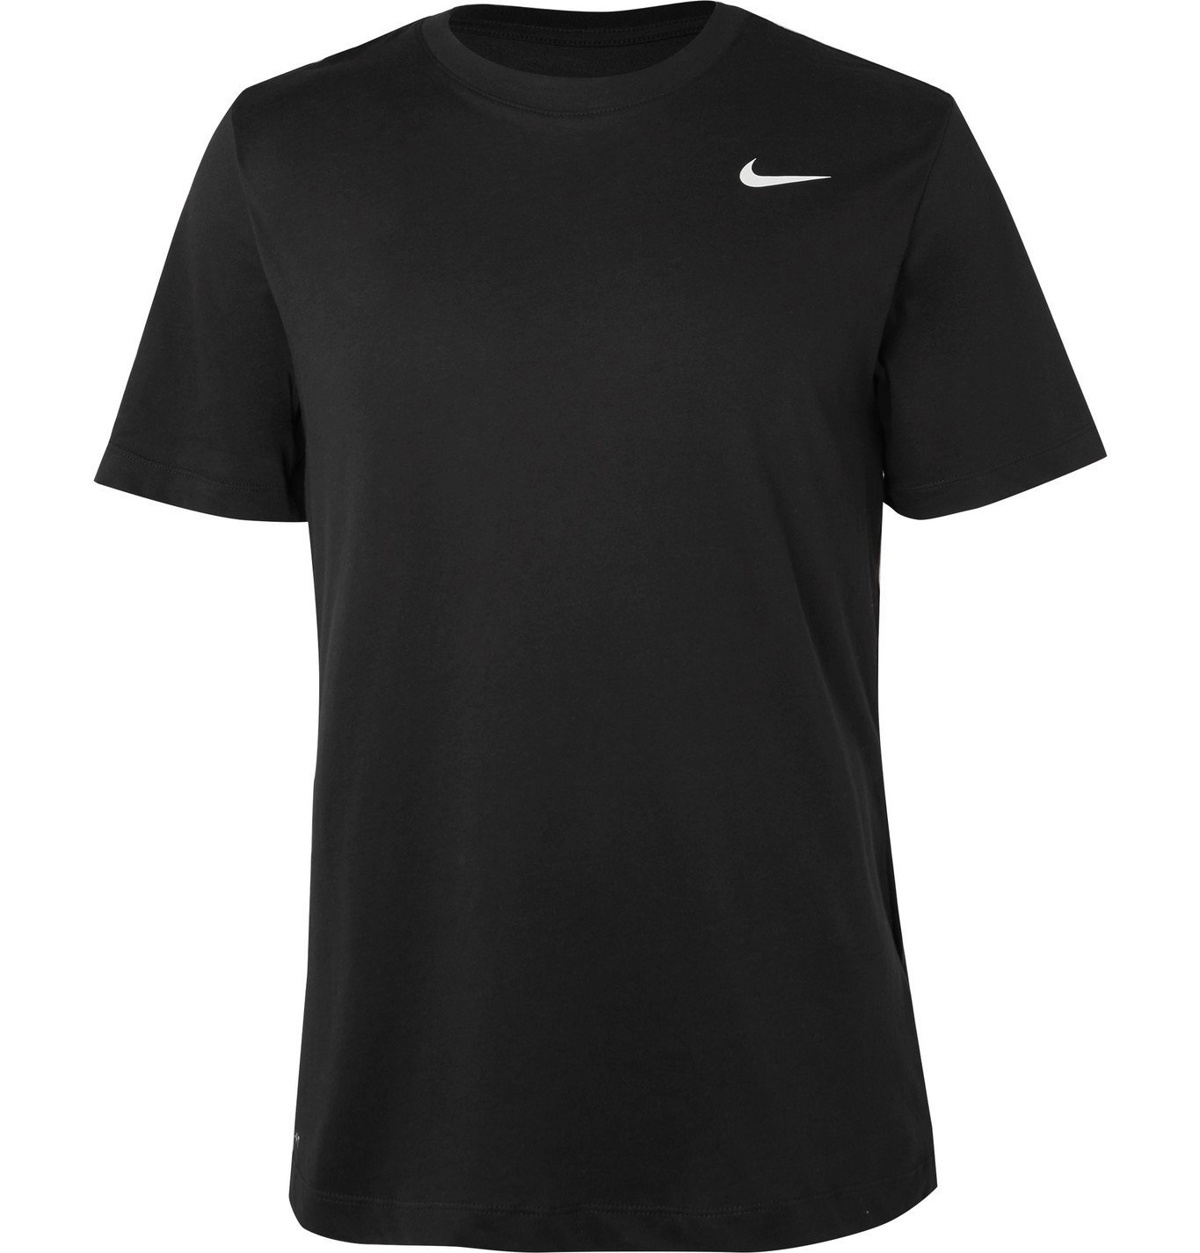 Karakteriseren Oneffenheden Sport Nike Training - Cotton-Blend Dri-FIT T-Shirt - Black Nike Training